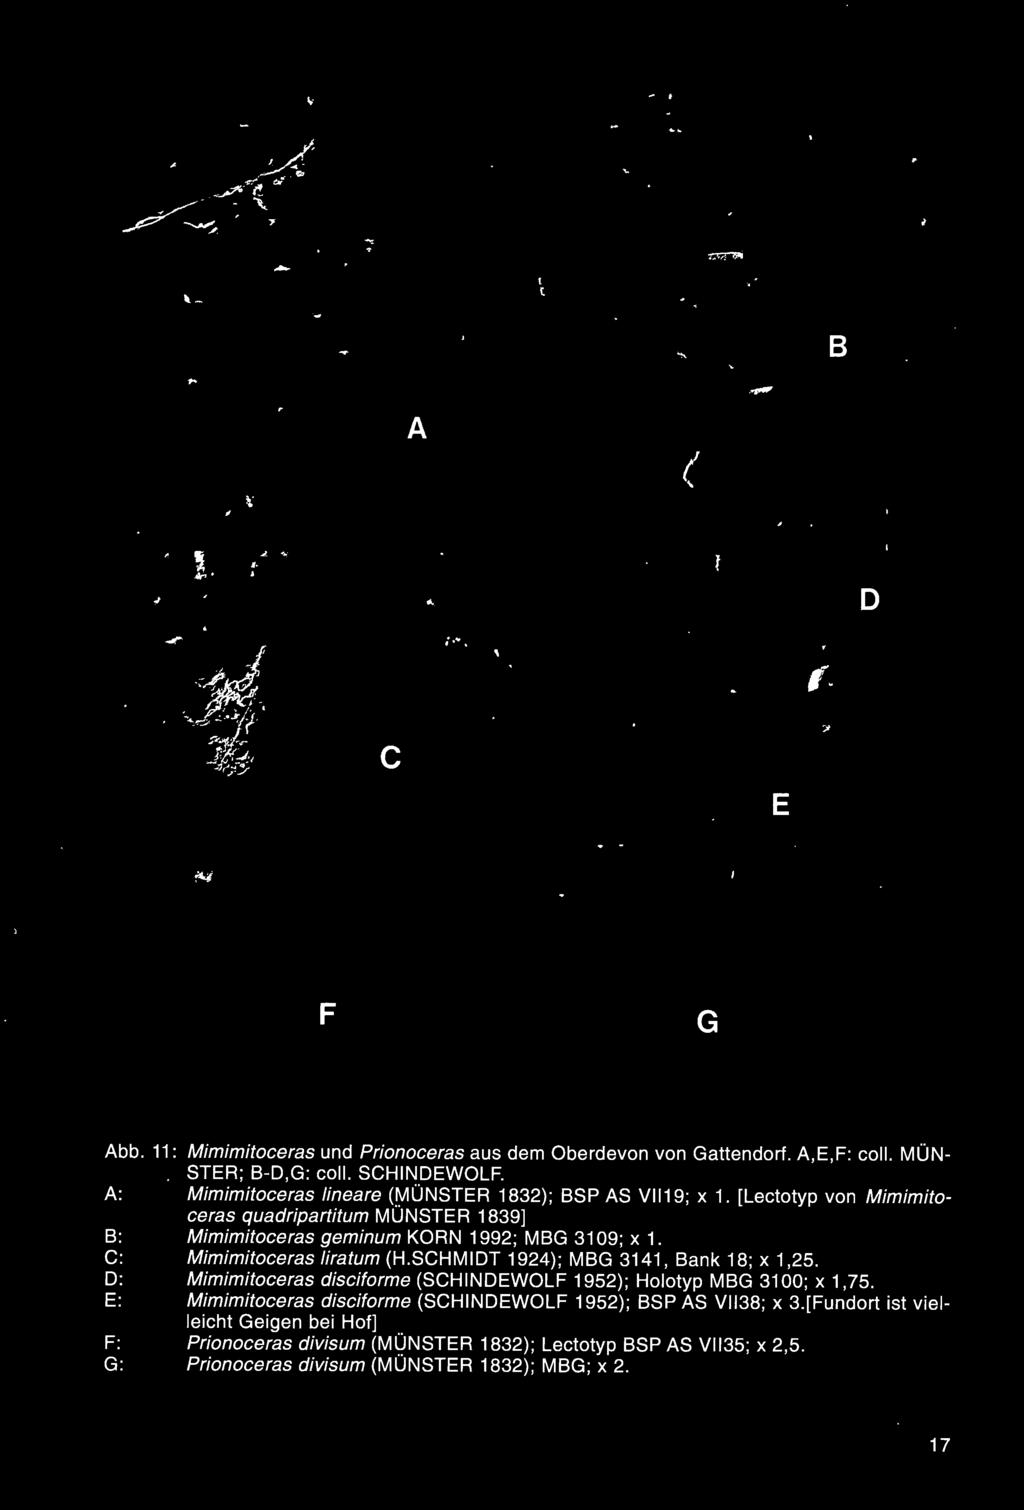 D: Mimimitoceras disciforme (SCHINDEWOLF 1952); Holotyp MBG 3100; x 1,75.